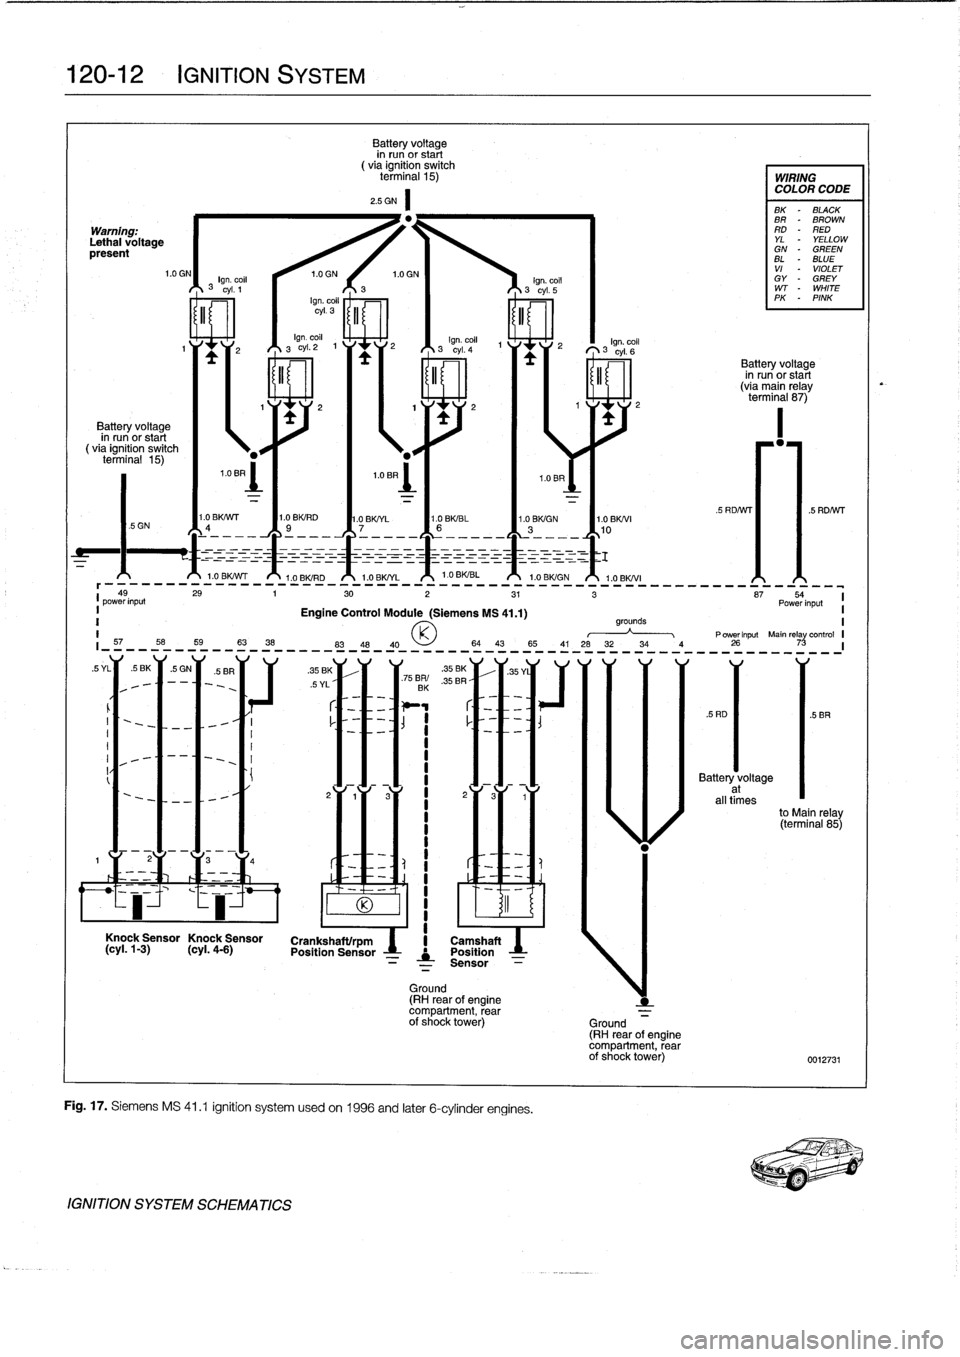 BMW 318i 1996 E36 Workshop Manual 
120-12

	

IGNITION
SYSTEM

Warning
.
Lethal
voltagepresent

Battery
voltage
in
run
or
start
(via
ignitíon
switch
terminal
15)

I
t

IGNITION
SYSTEM
SCHEMATICS

Battery
voltage
in
run
or
start
(
via